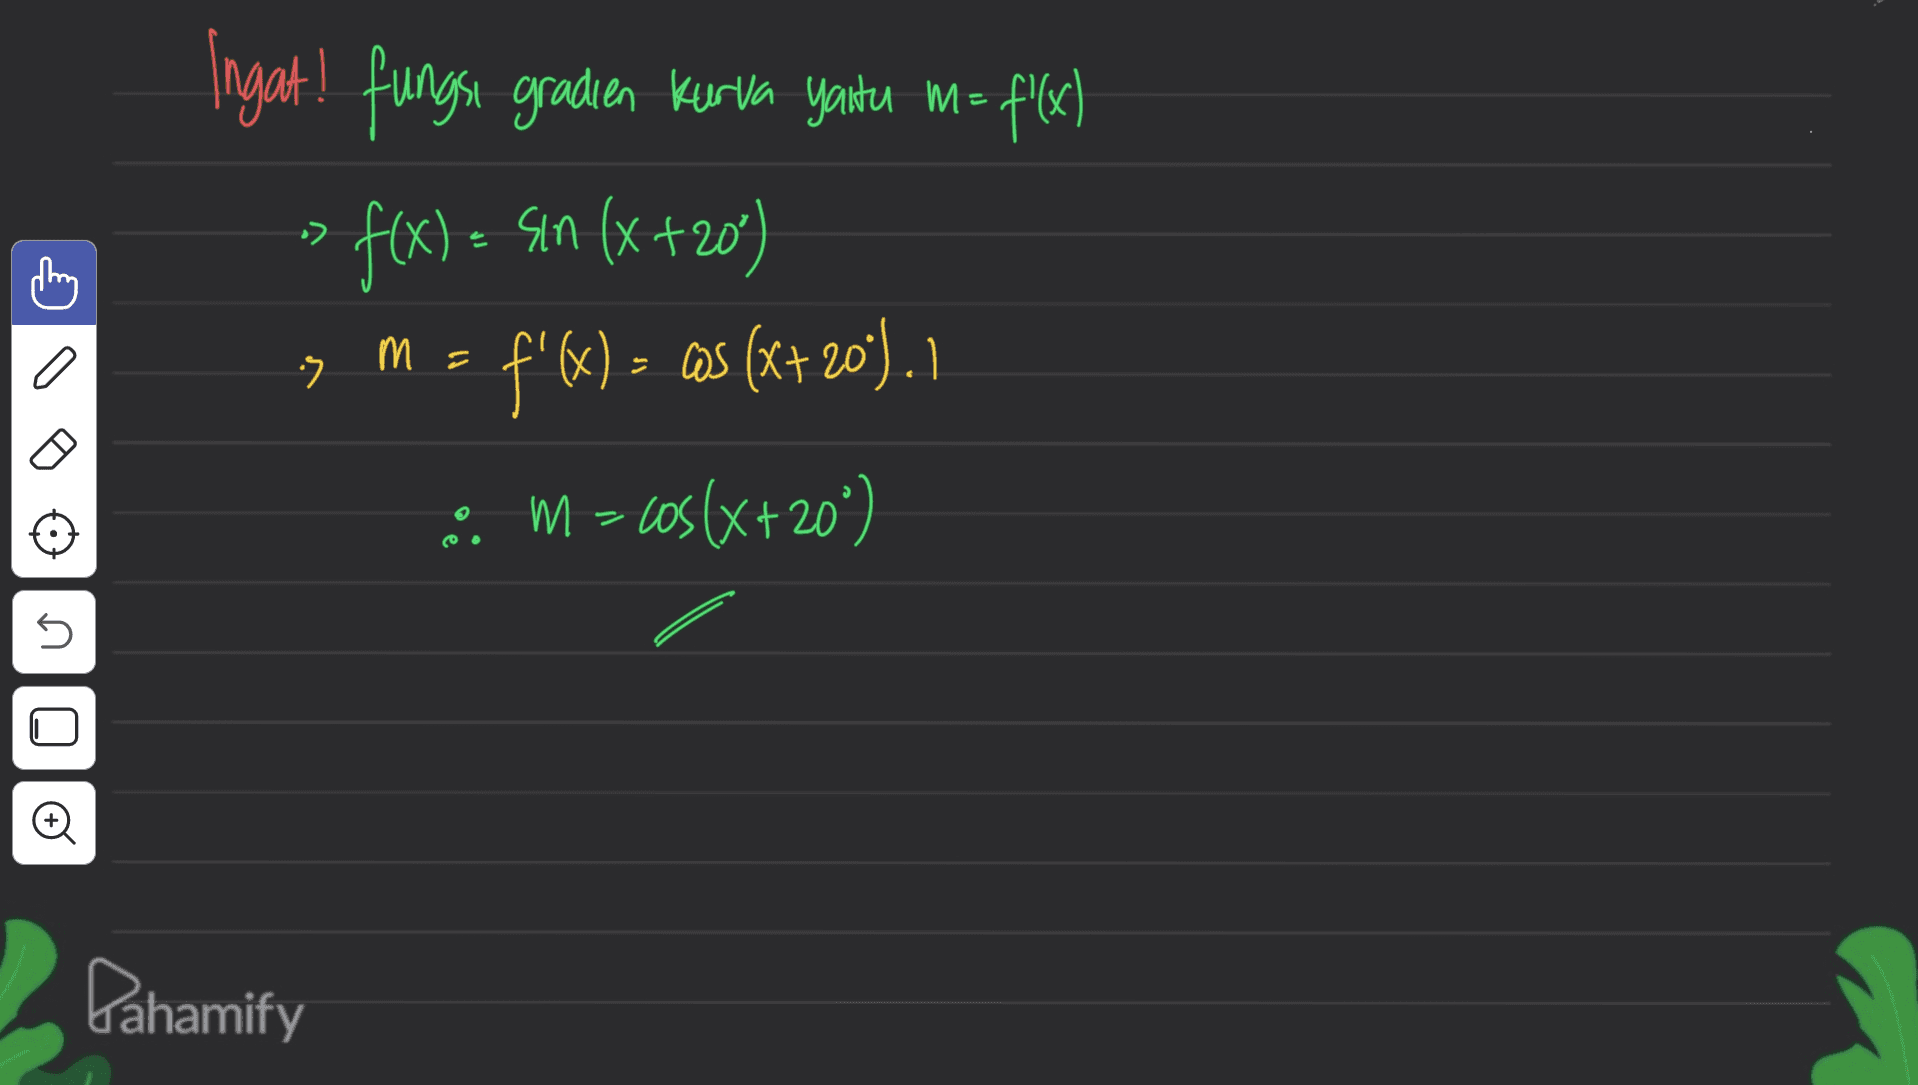 ! Ingat! fungsi graden kuvia youtu mo a flaci = '(x) f(x) = sin (x +20) M = f'(x) = a (x+ 201). :: M = cos(x+20°) ל 5 o Dahamify 